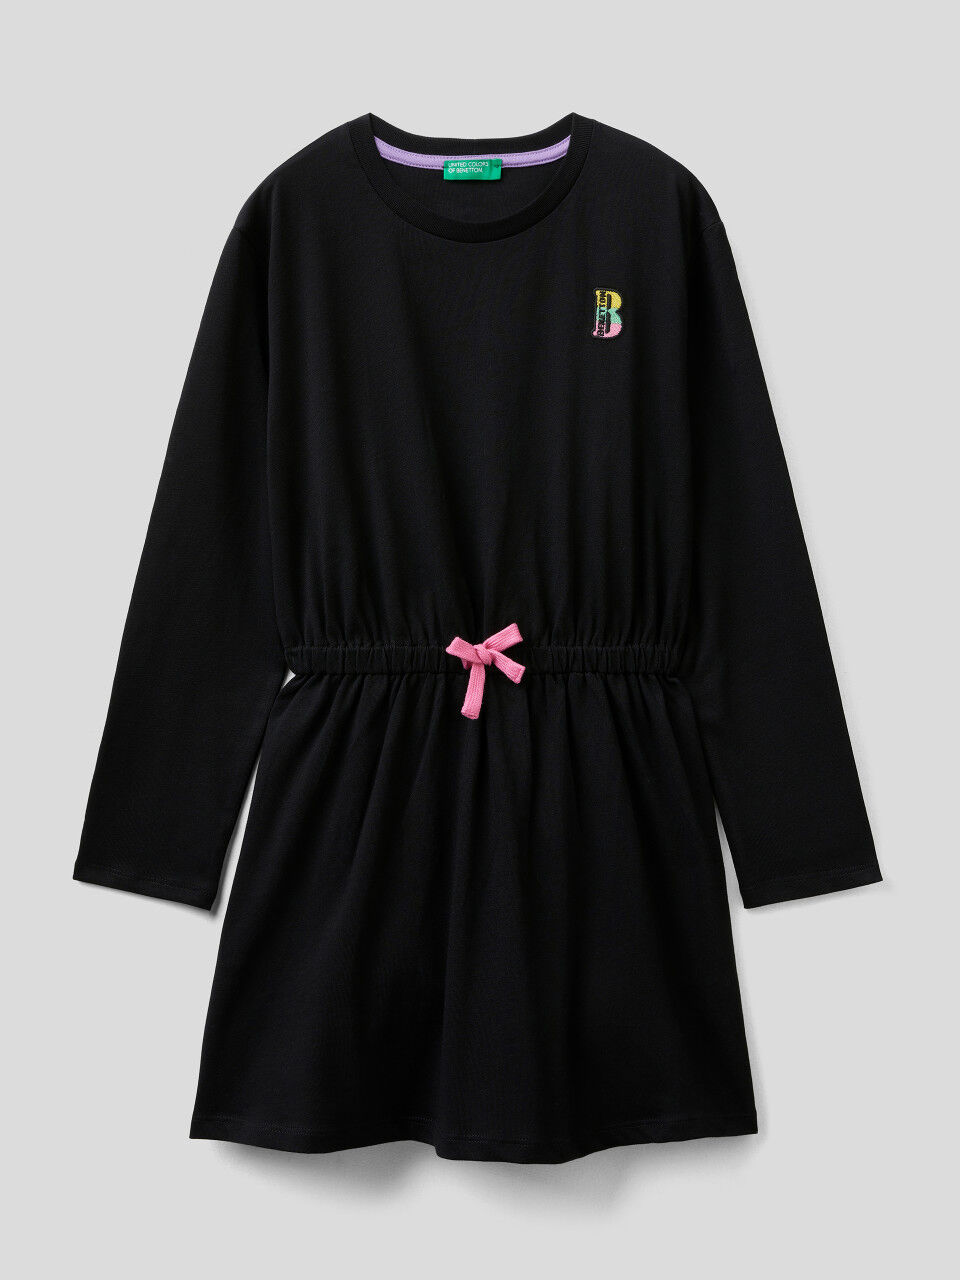 Benetton BNWT Benetton Girls Dress In Size 1-2 Years Bargain Buy 